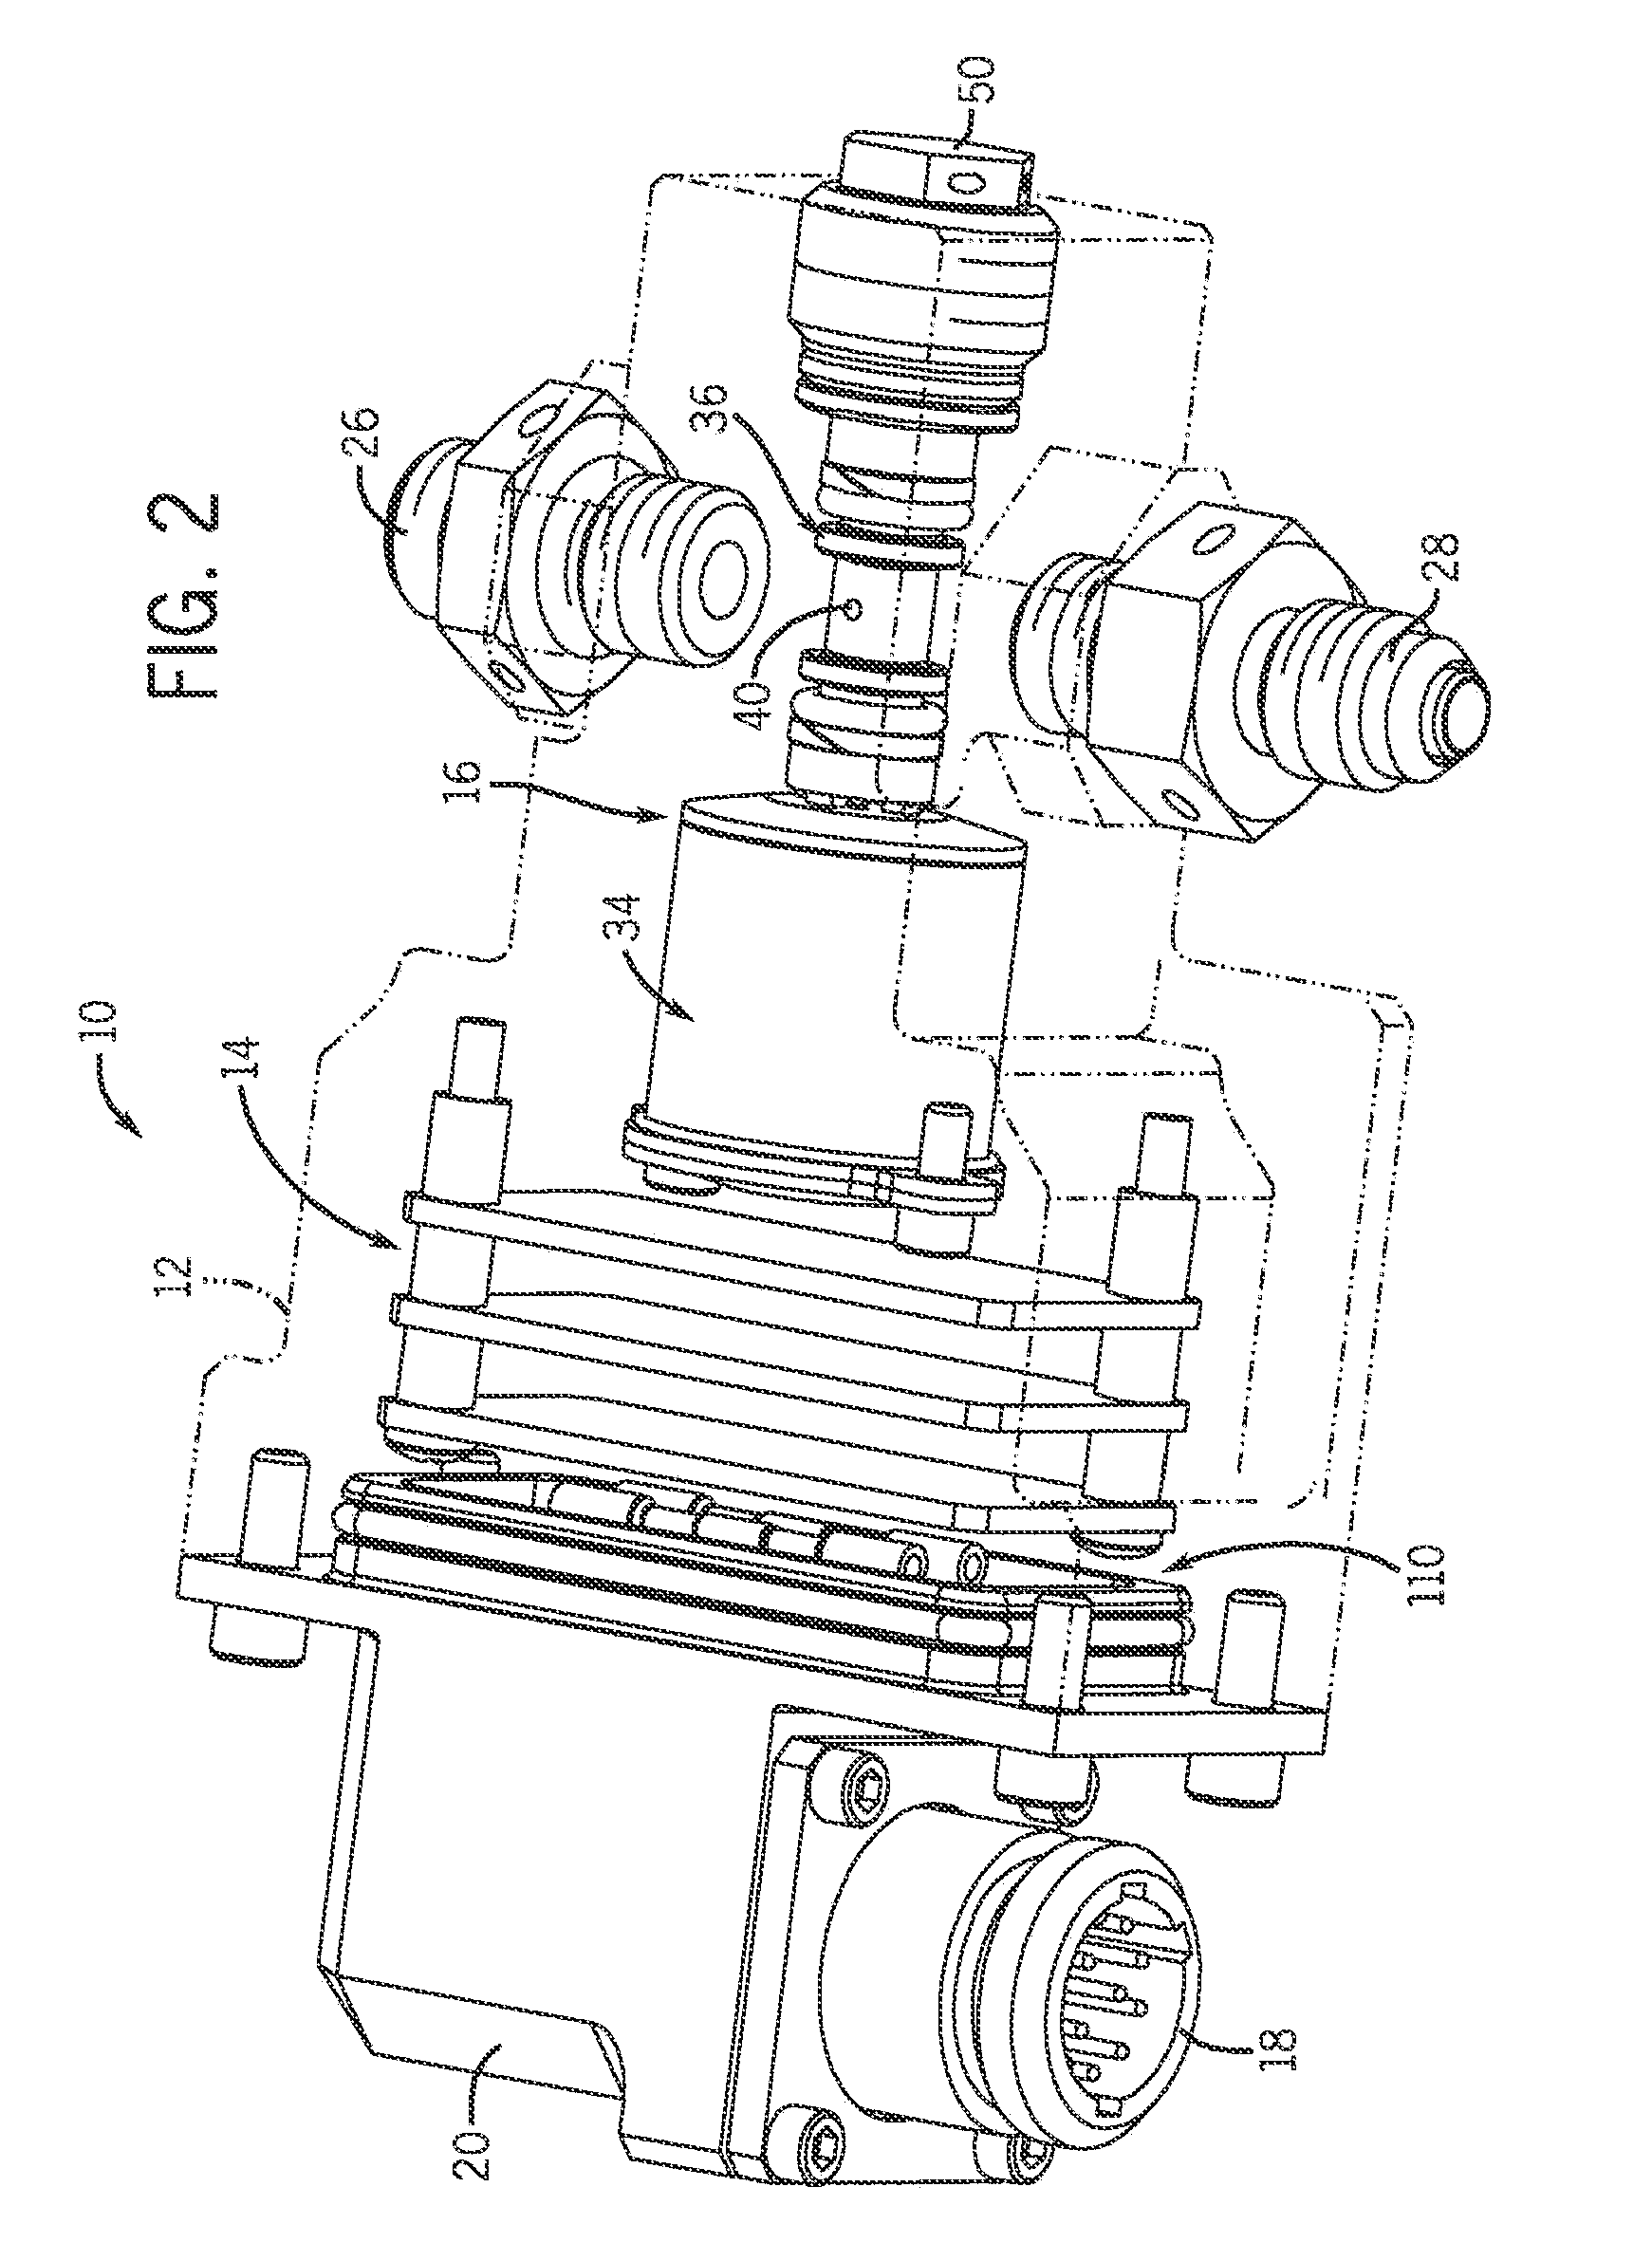 Ullage pressure regulator